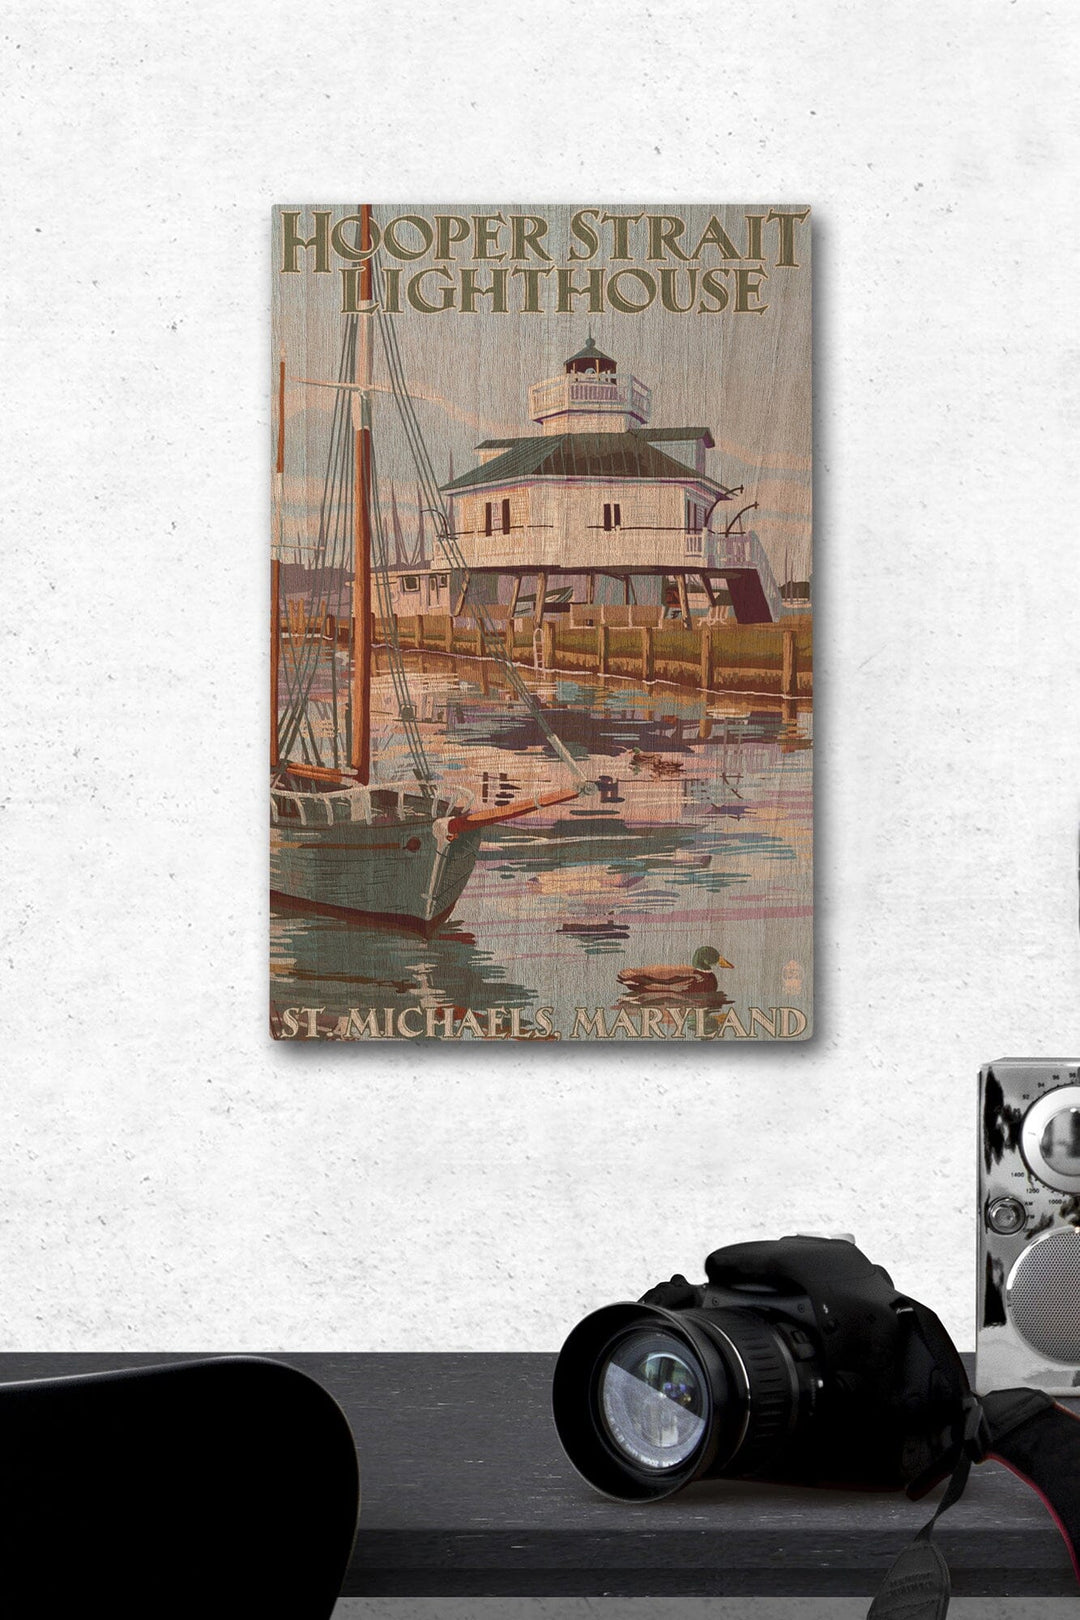 St. Michaels, Maryland, Hooper Strait Lighthouse (Colorized), Lantern Press Artwork, Wood Signs and Postcards Wood Lantern Press 12 x 18 Wood Gallery Print 